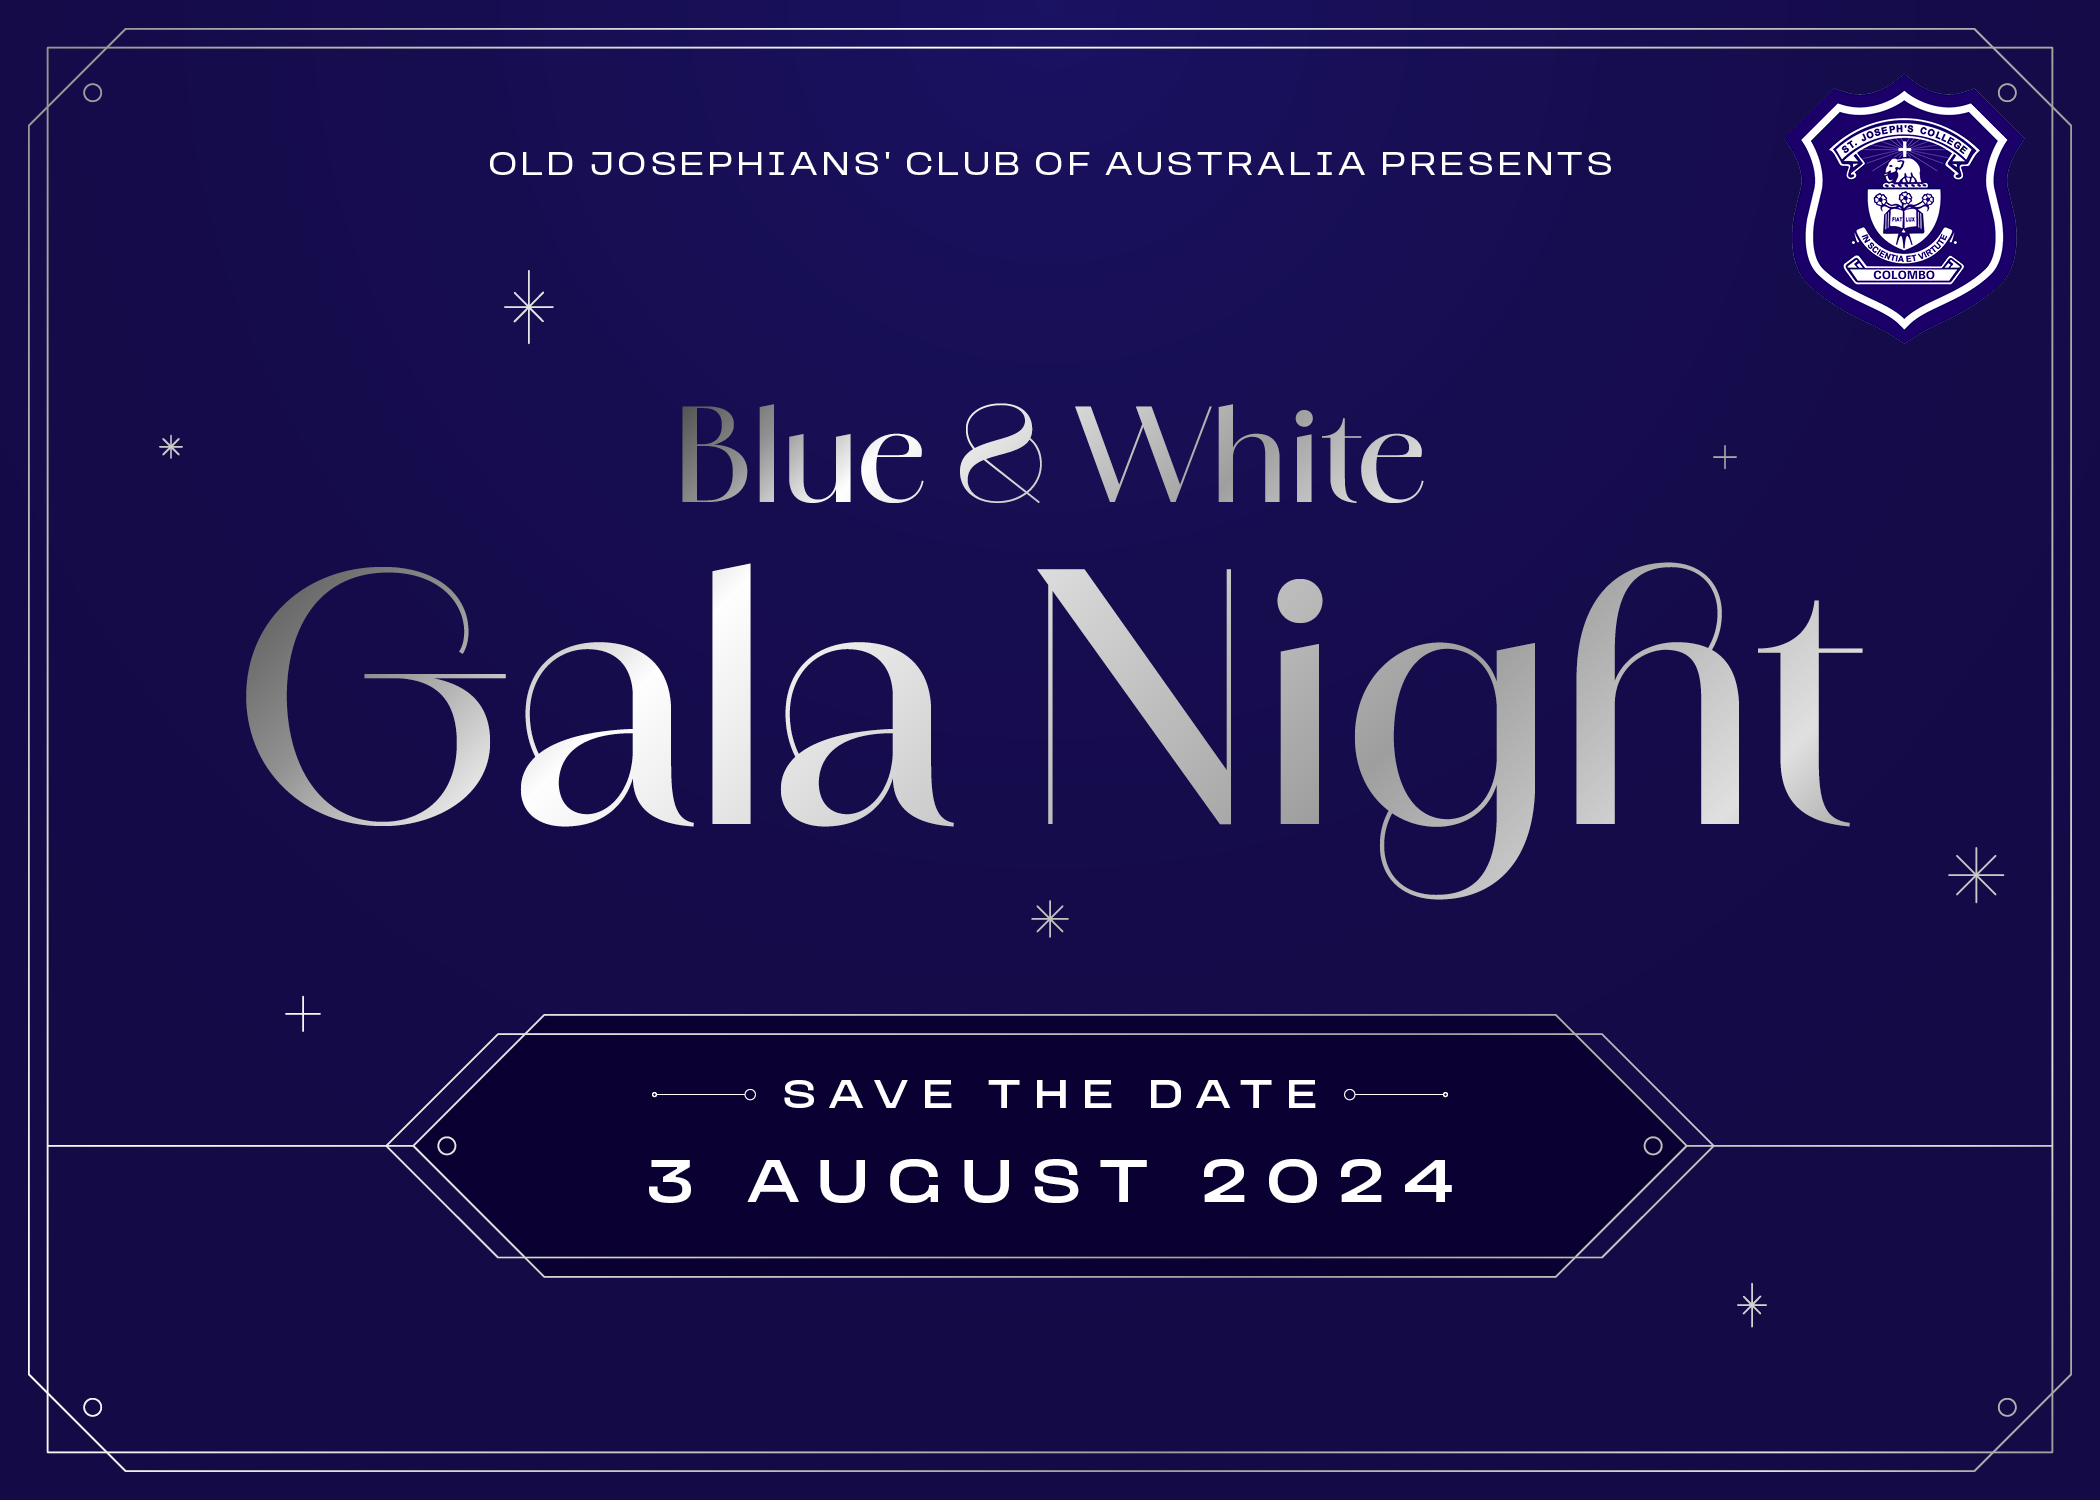 SJC - Blue & White Gala Night - Save the date FINAL